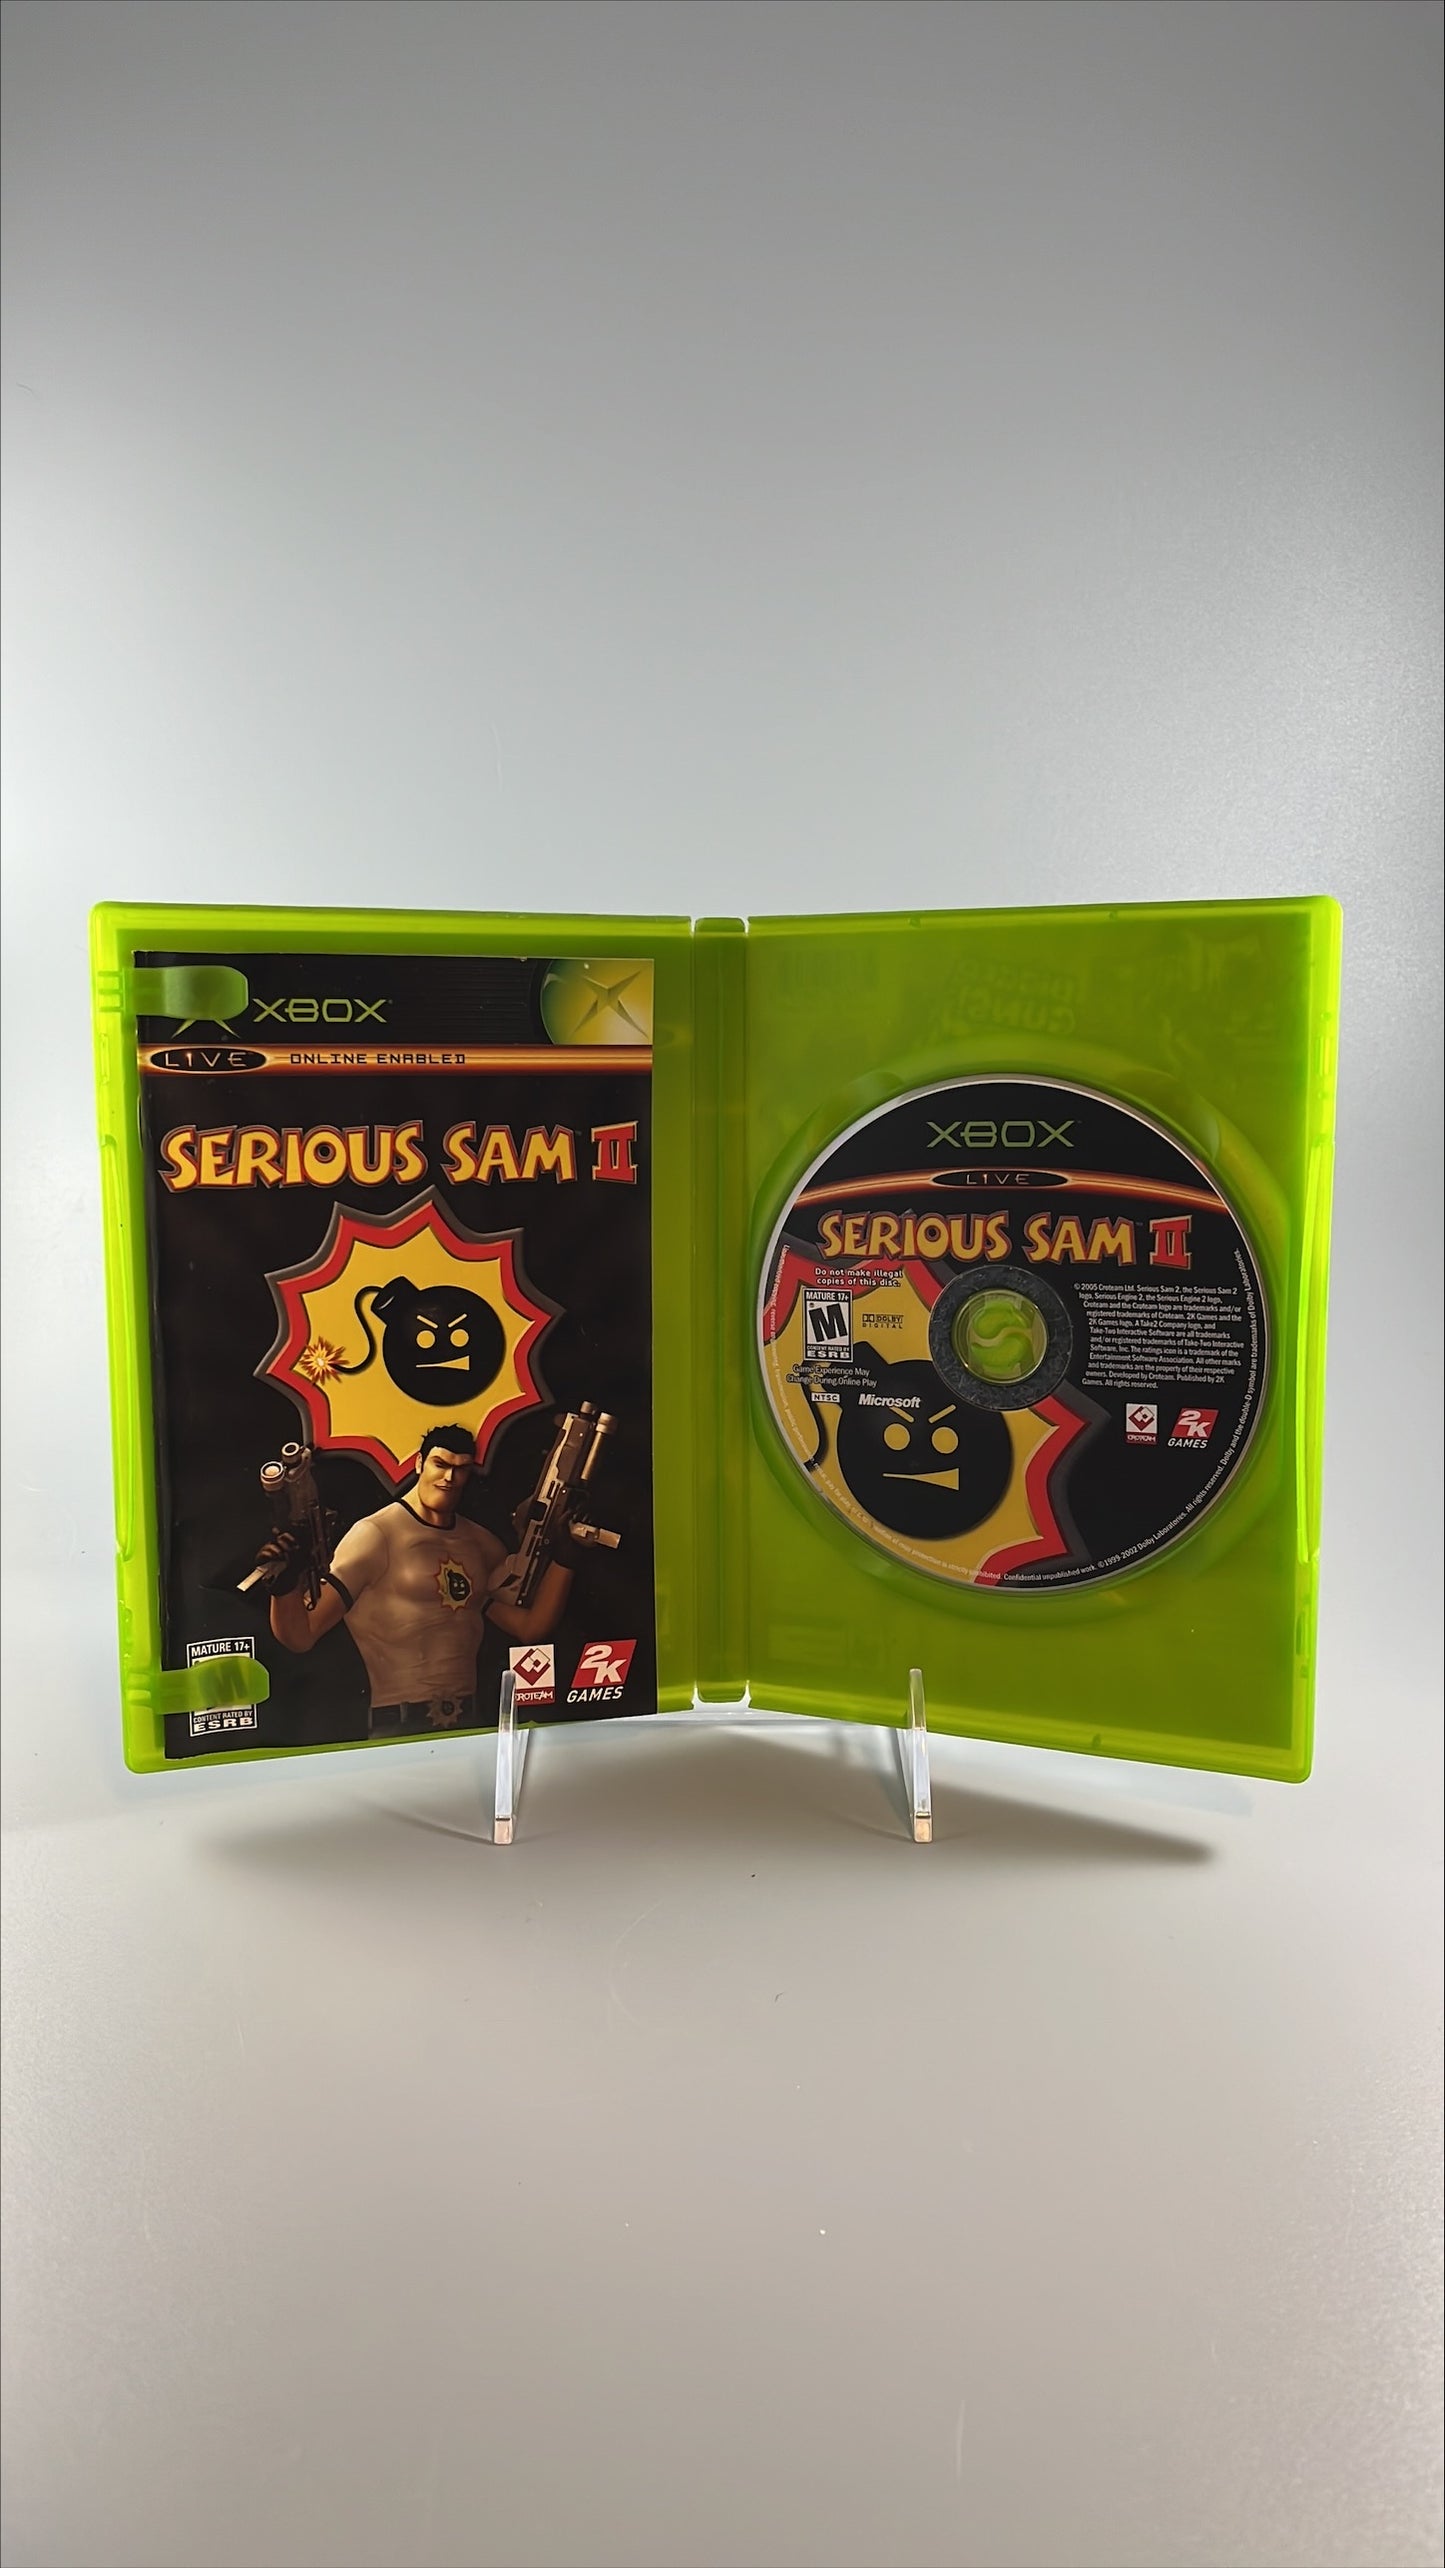 Serious Sam II